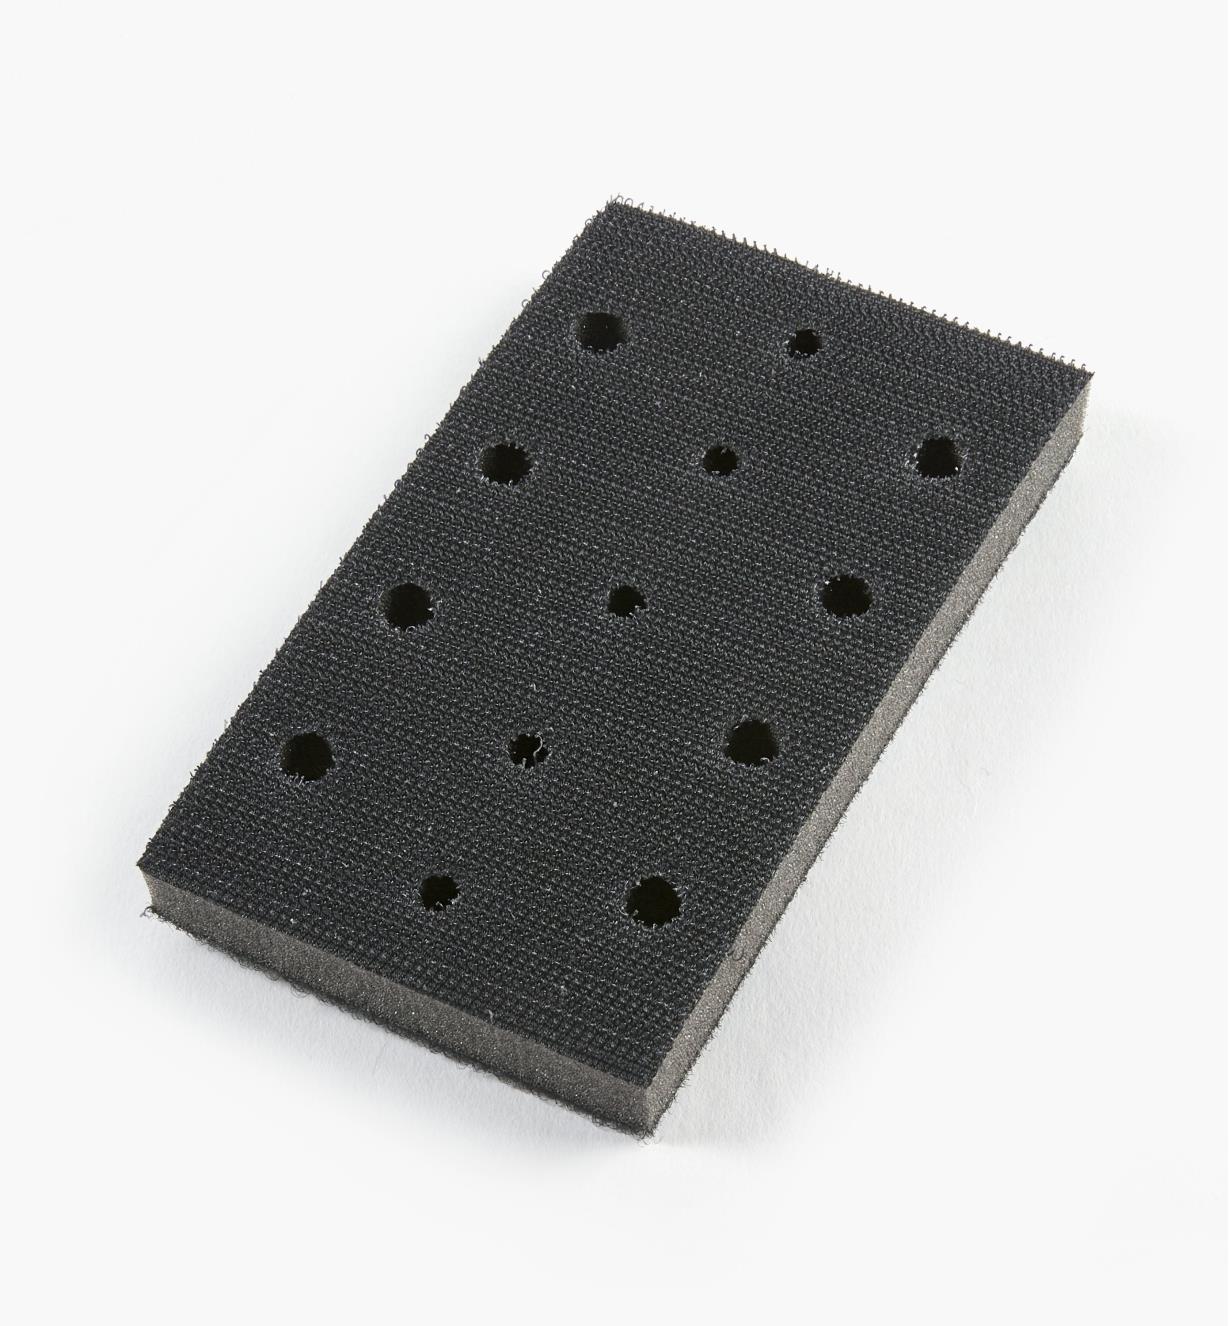 08K3162 - Abranet Grip Multi-Hole Interface Pad